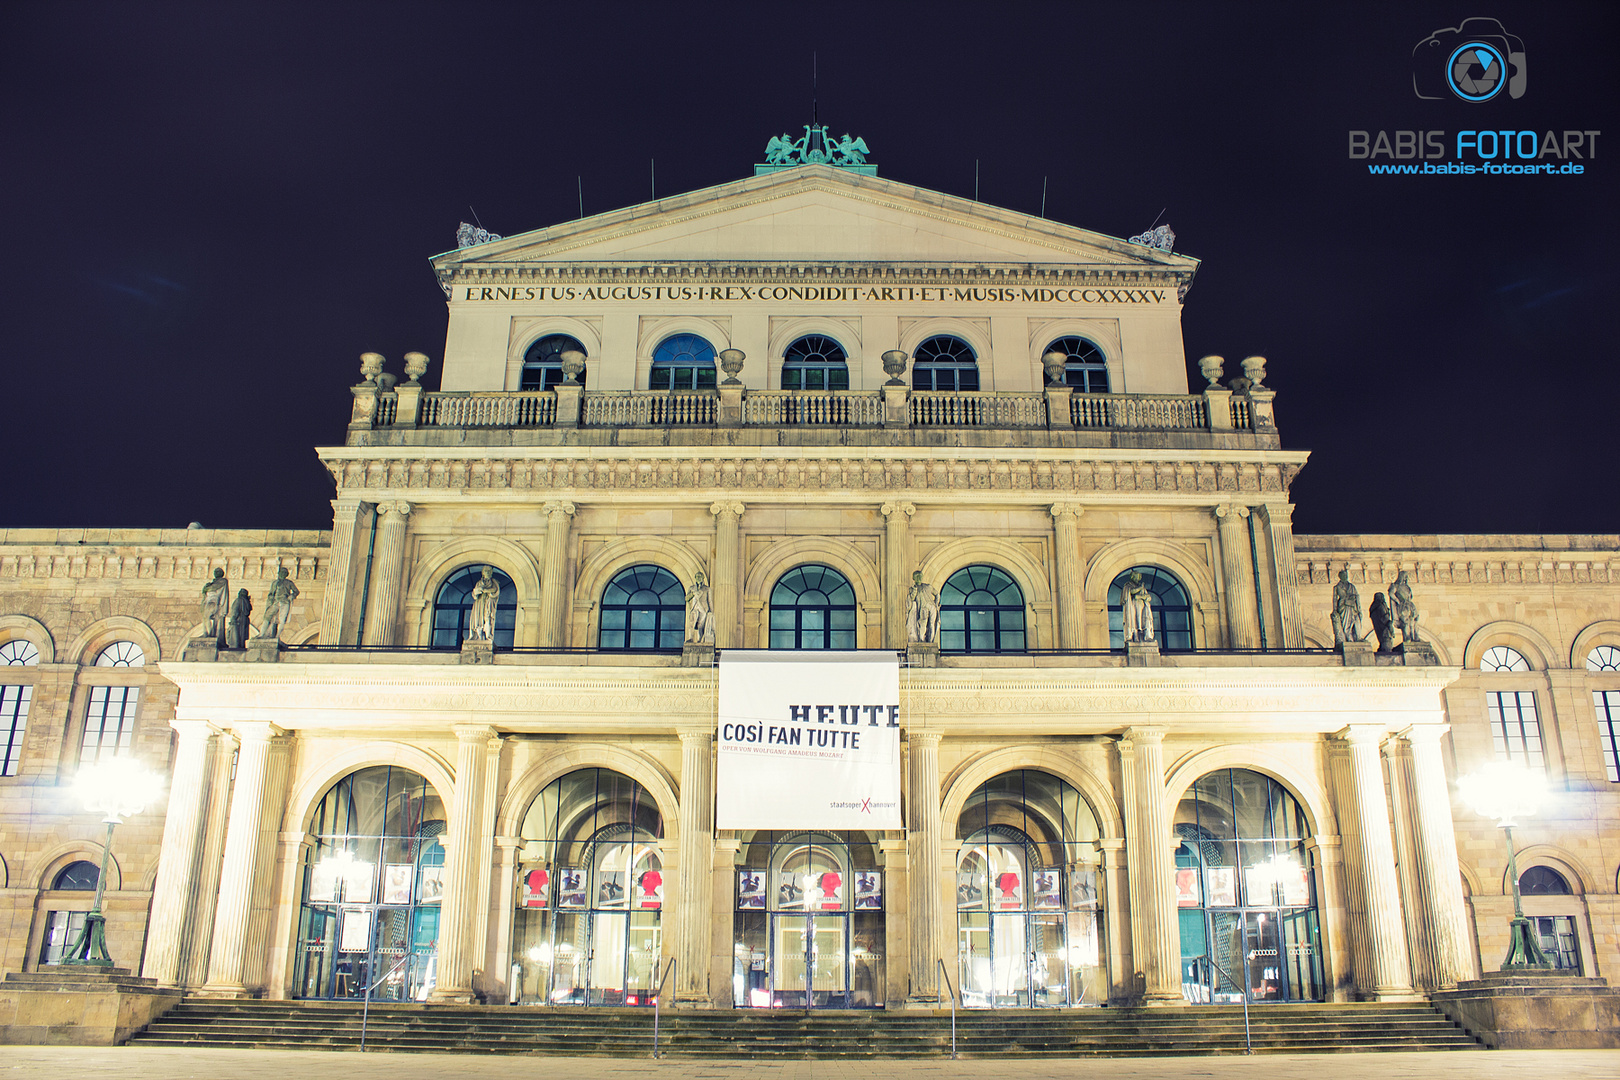 Hannover Oper bei Nacht